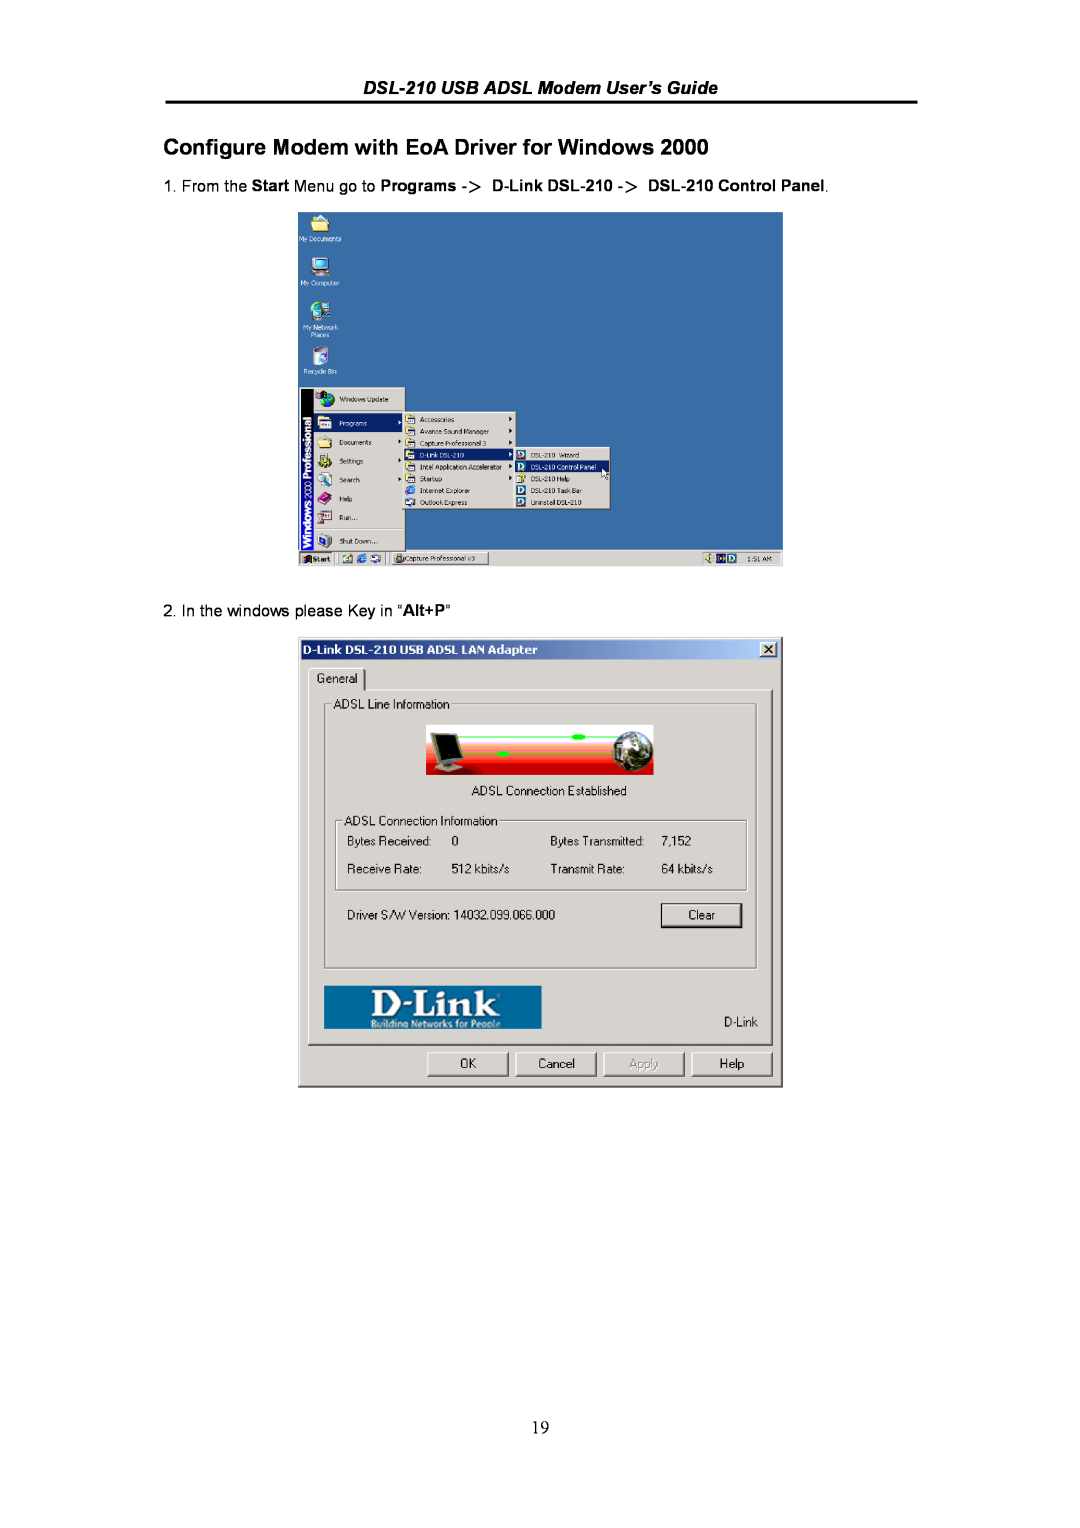 D-Link manual Configure Modem with EoA Driver for Windows, DSL-210 USB ADSL Modem User’s Guide 